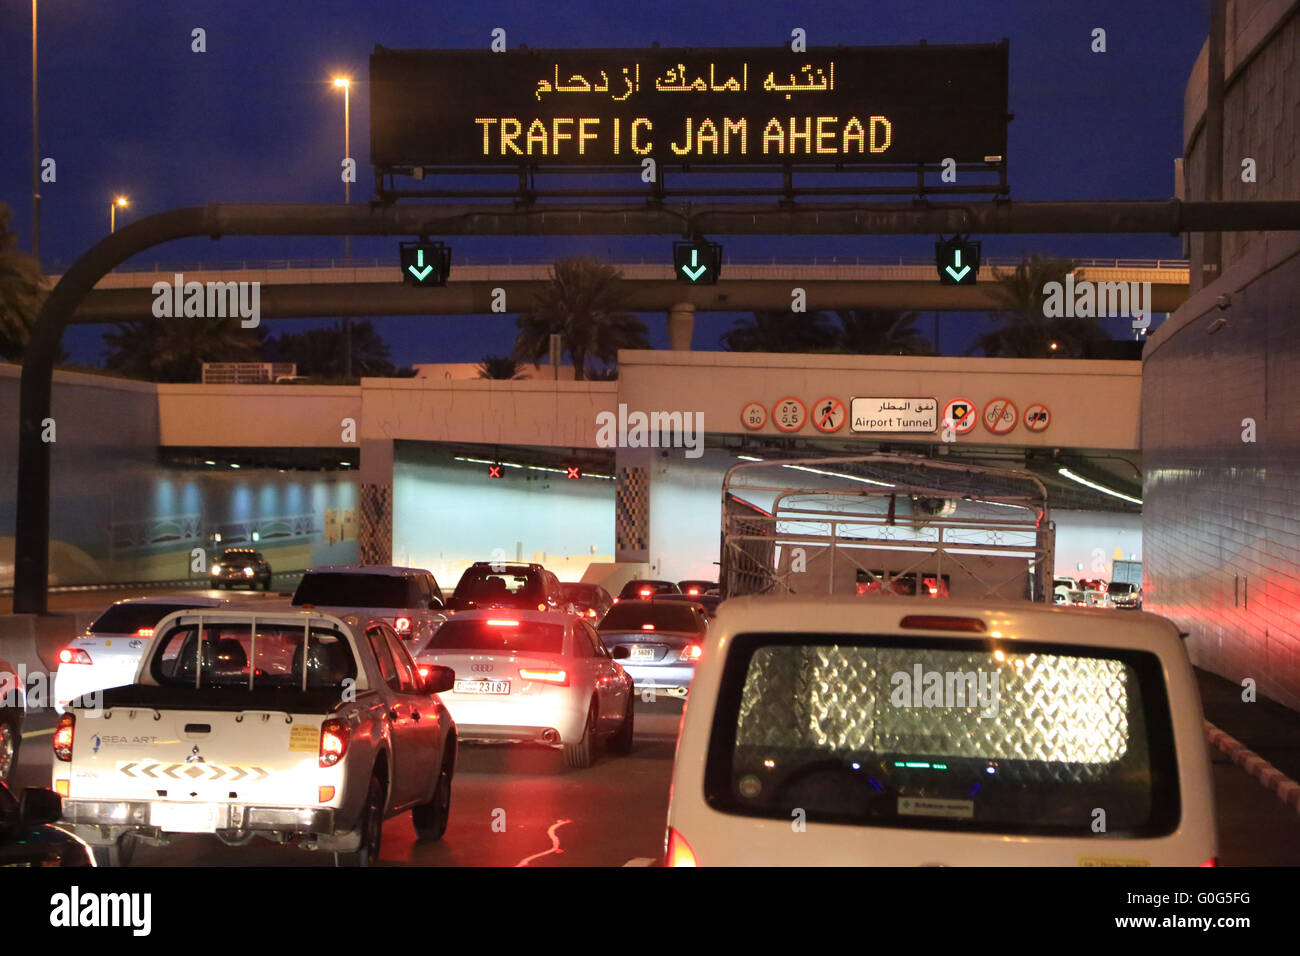 Traffic Jam in the Dubai Airport tunnel, Stock Photo